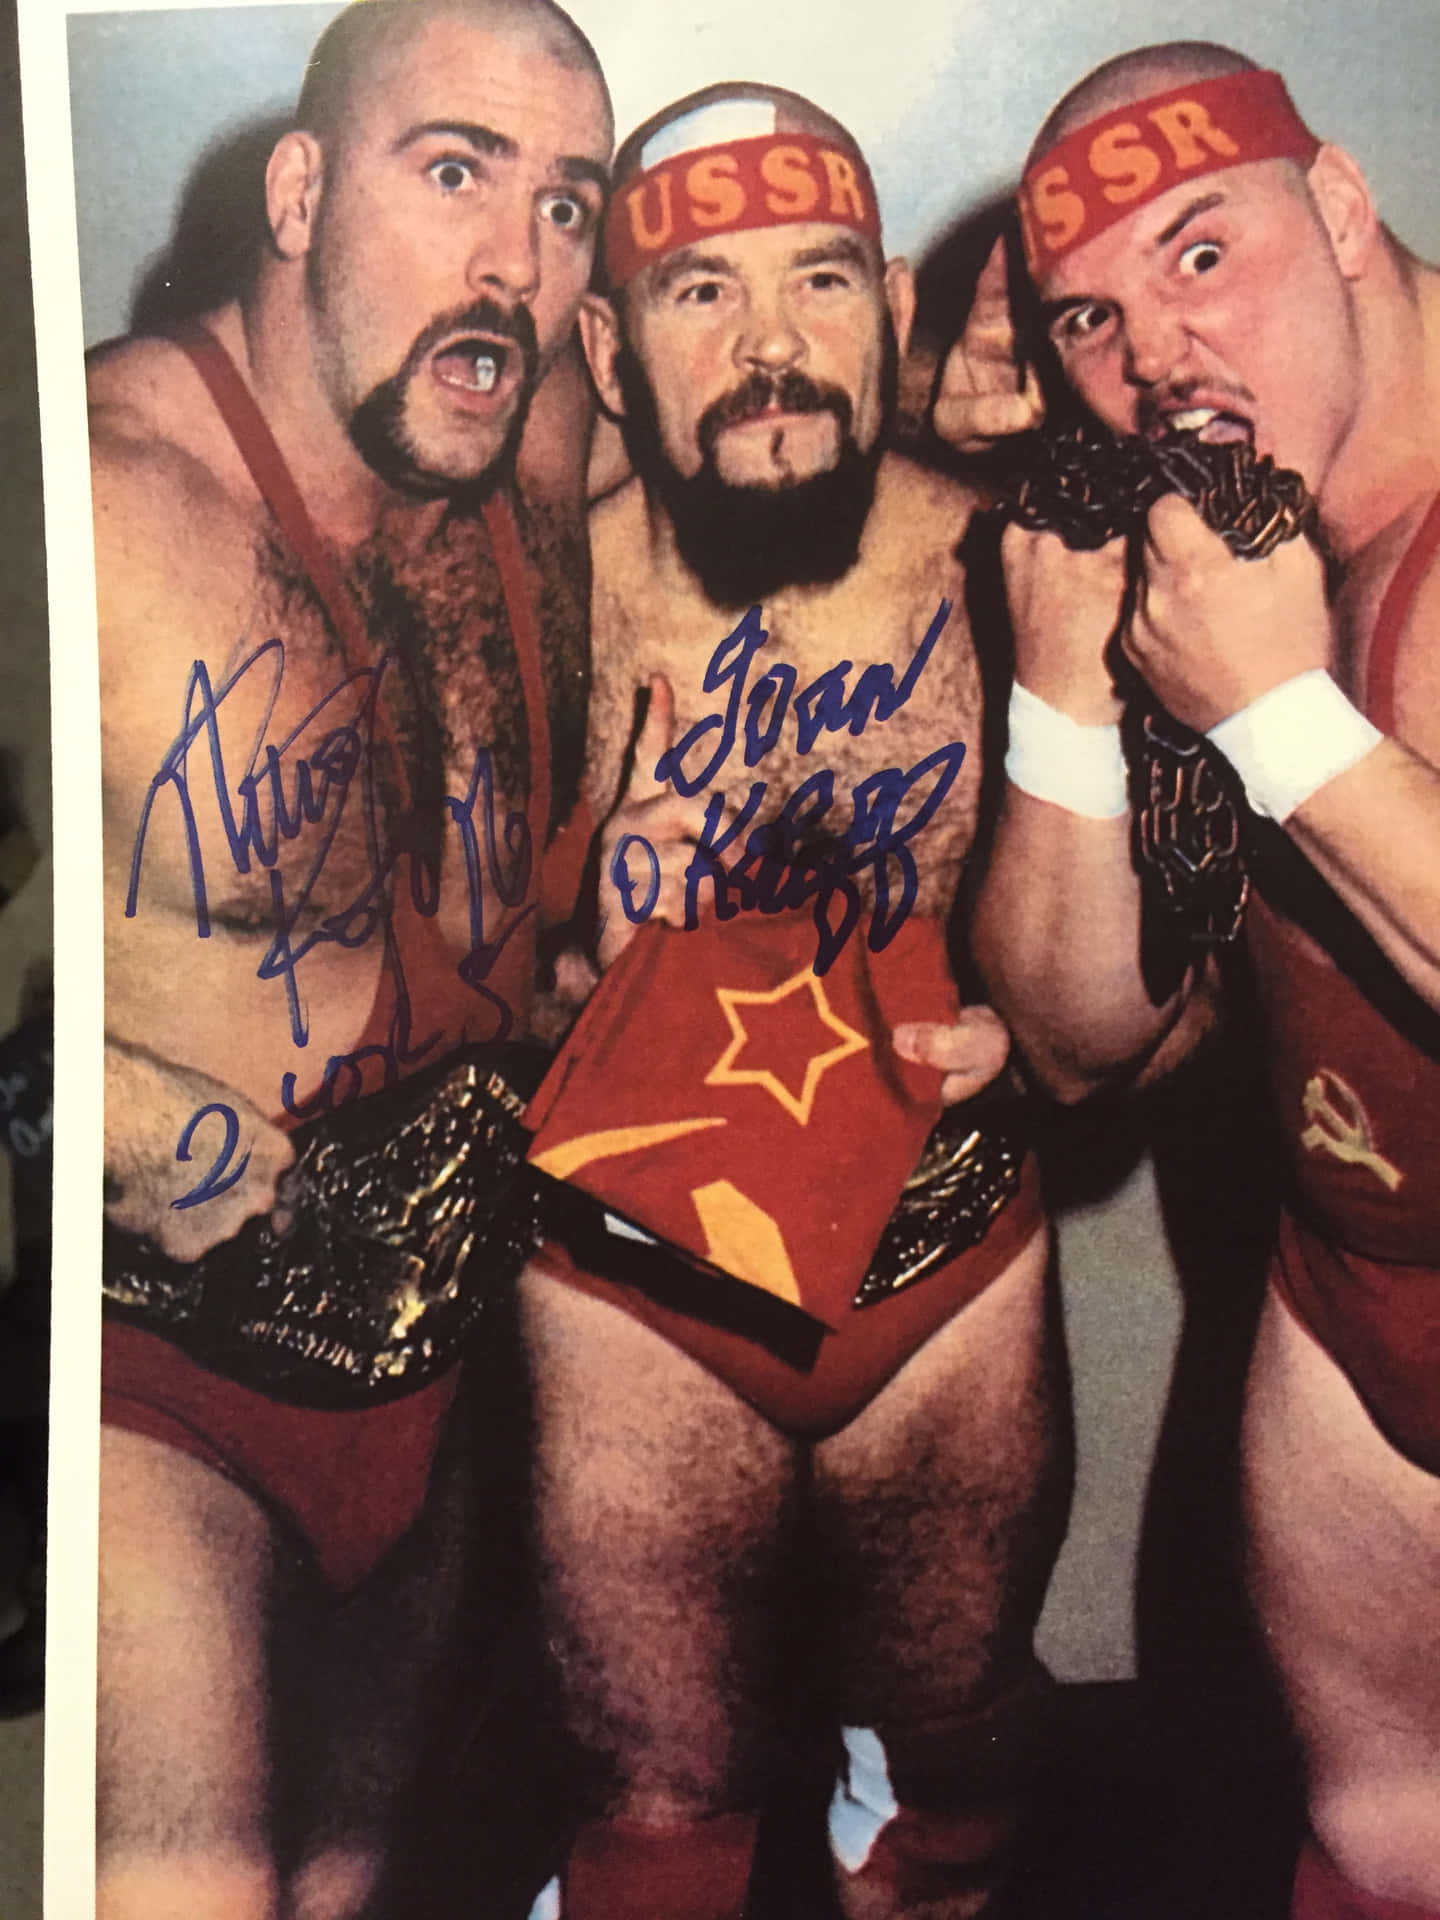 A Signed Portrait of Canadian Wrestler Ivan Koloff and Krusher Kruschev Wallpaper